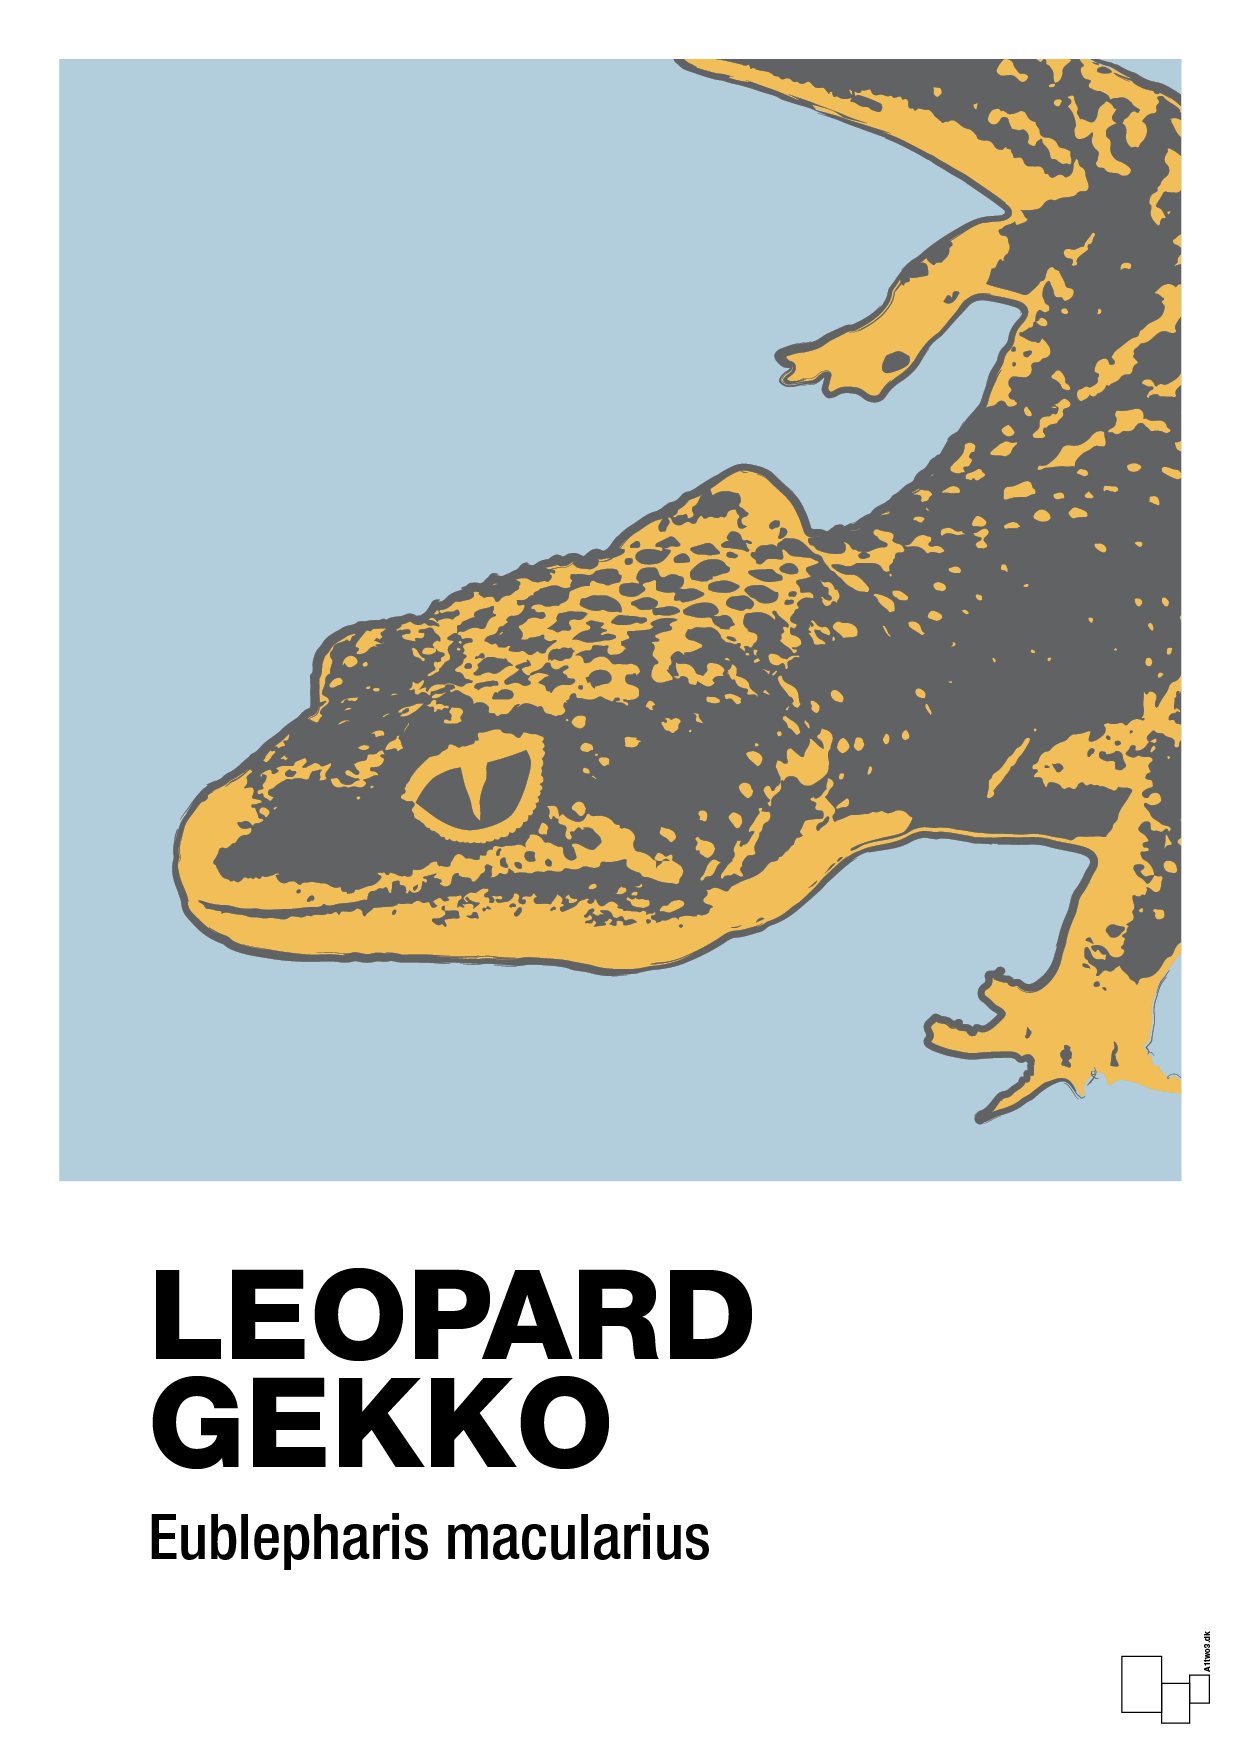 leopard gekko - Plakat med Videnskab i Heavenly Blue